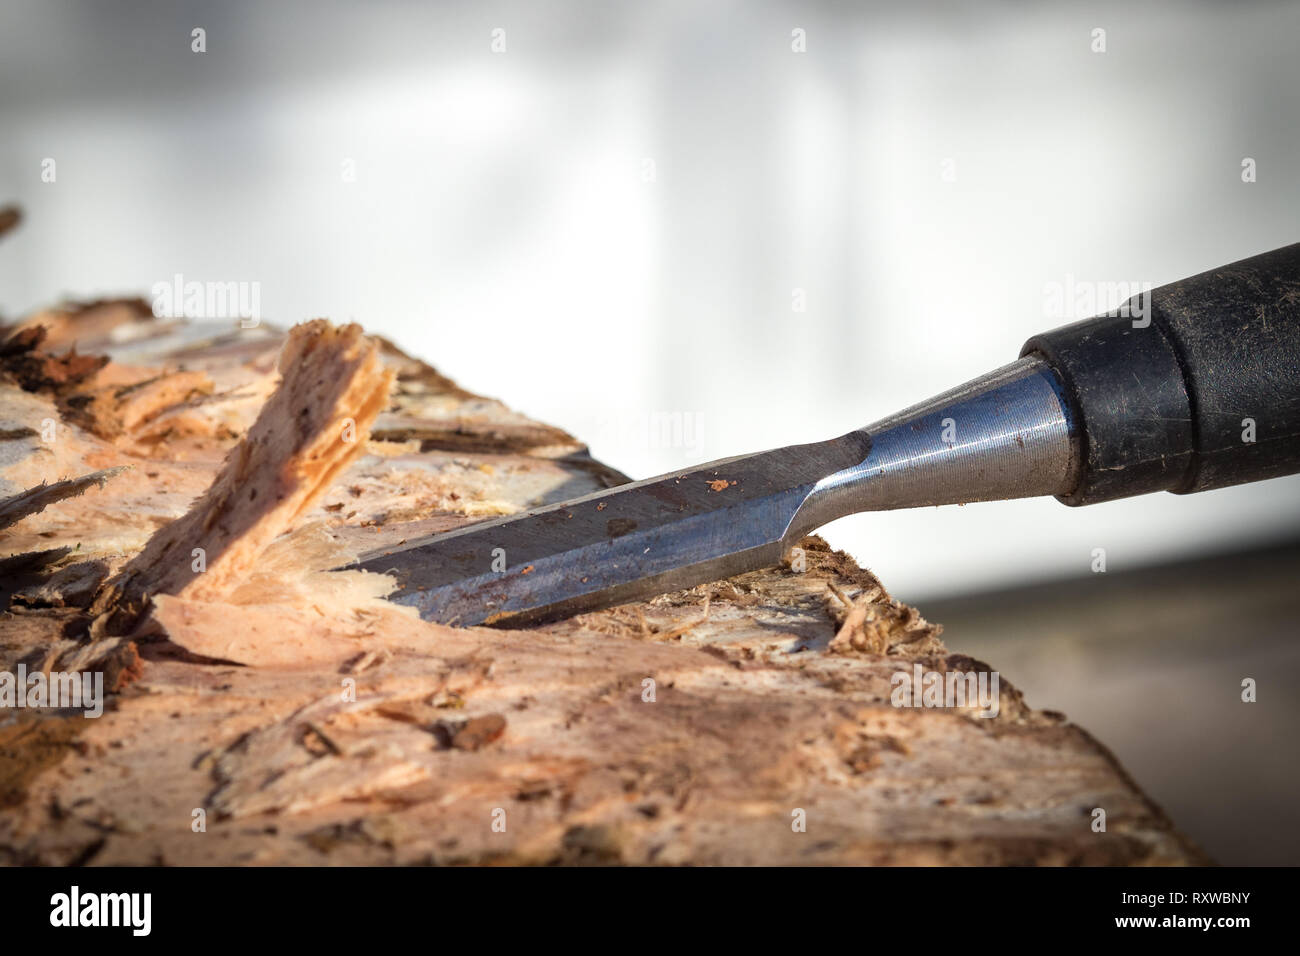 Closeup of chisel digging into bark of a tree stump/log. Stock Photo